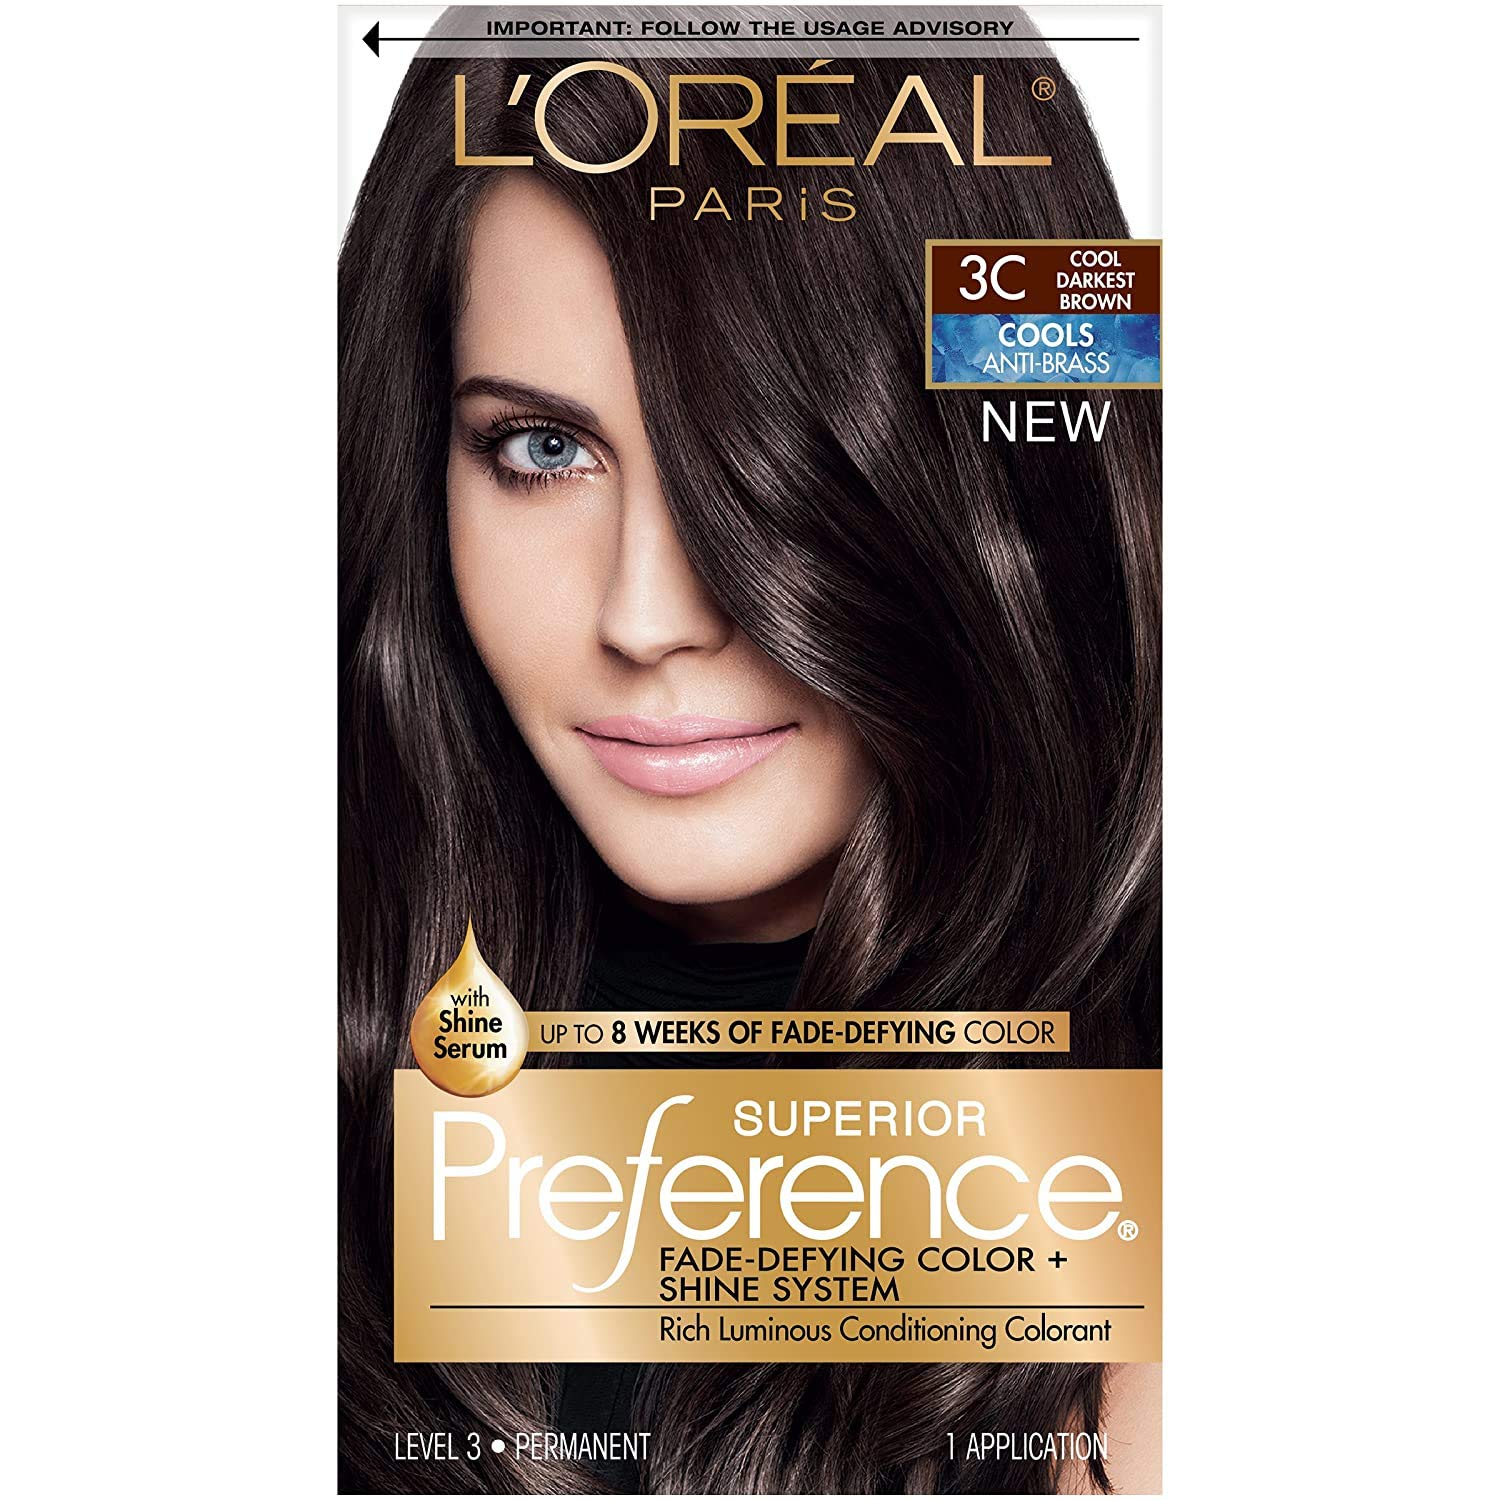 Mua L'Oreal Paris Superior Preference Fade-Defying + Shine Permanent Hair  Color, 3C Cool Darkest Brown, Pack of 1, Hair Dye trên Amazon Mỹ chính hãng  2023 | Fado